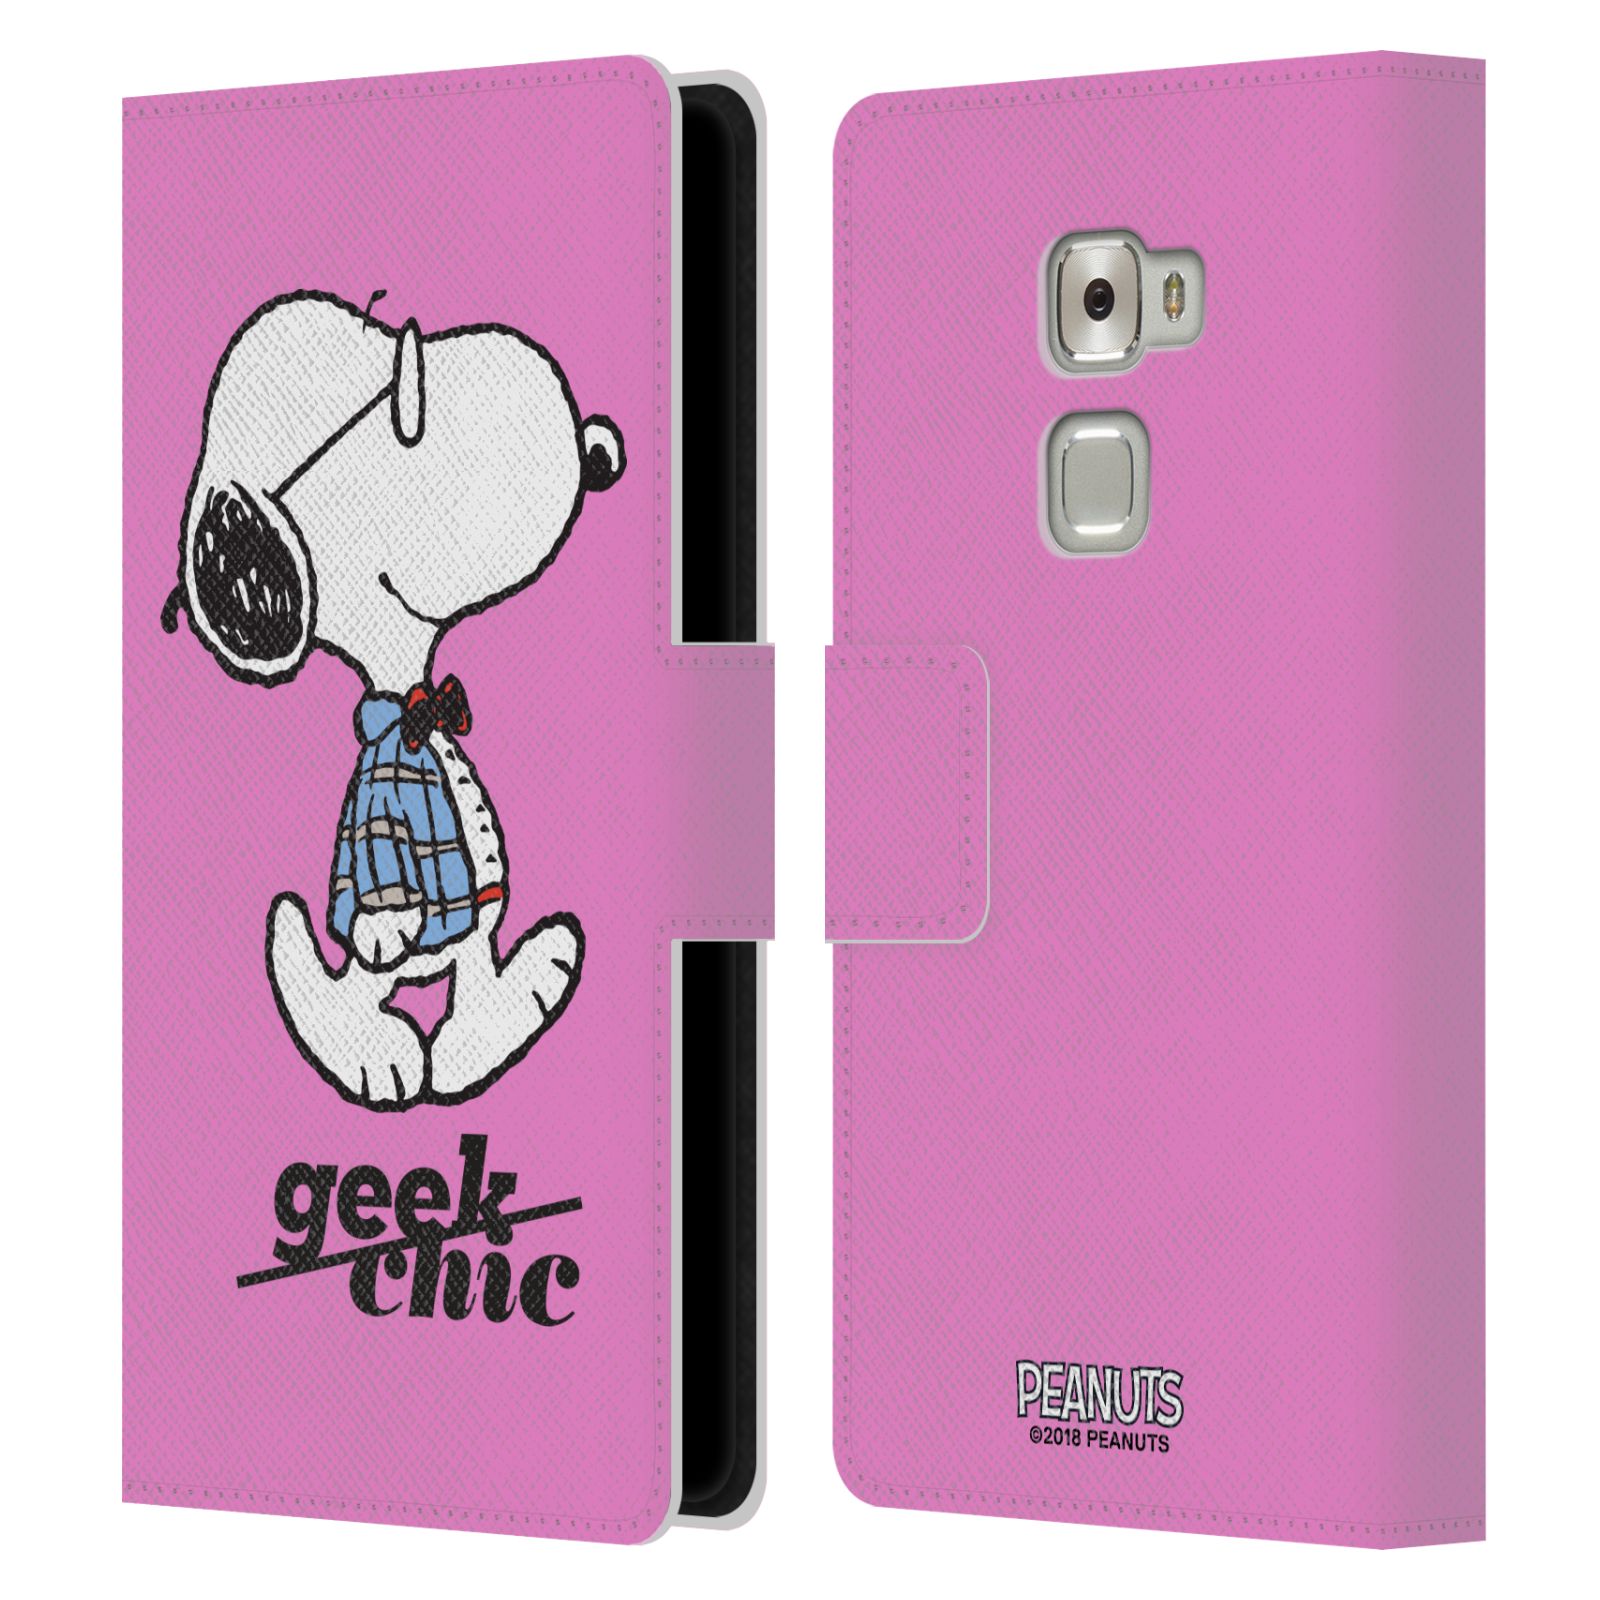 Pouzdro na mobil Huawei Mate S - Head Case - Peanuts - růžový pejsek snoopy nerd